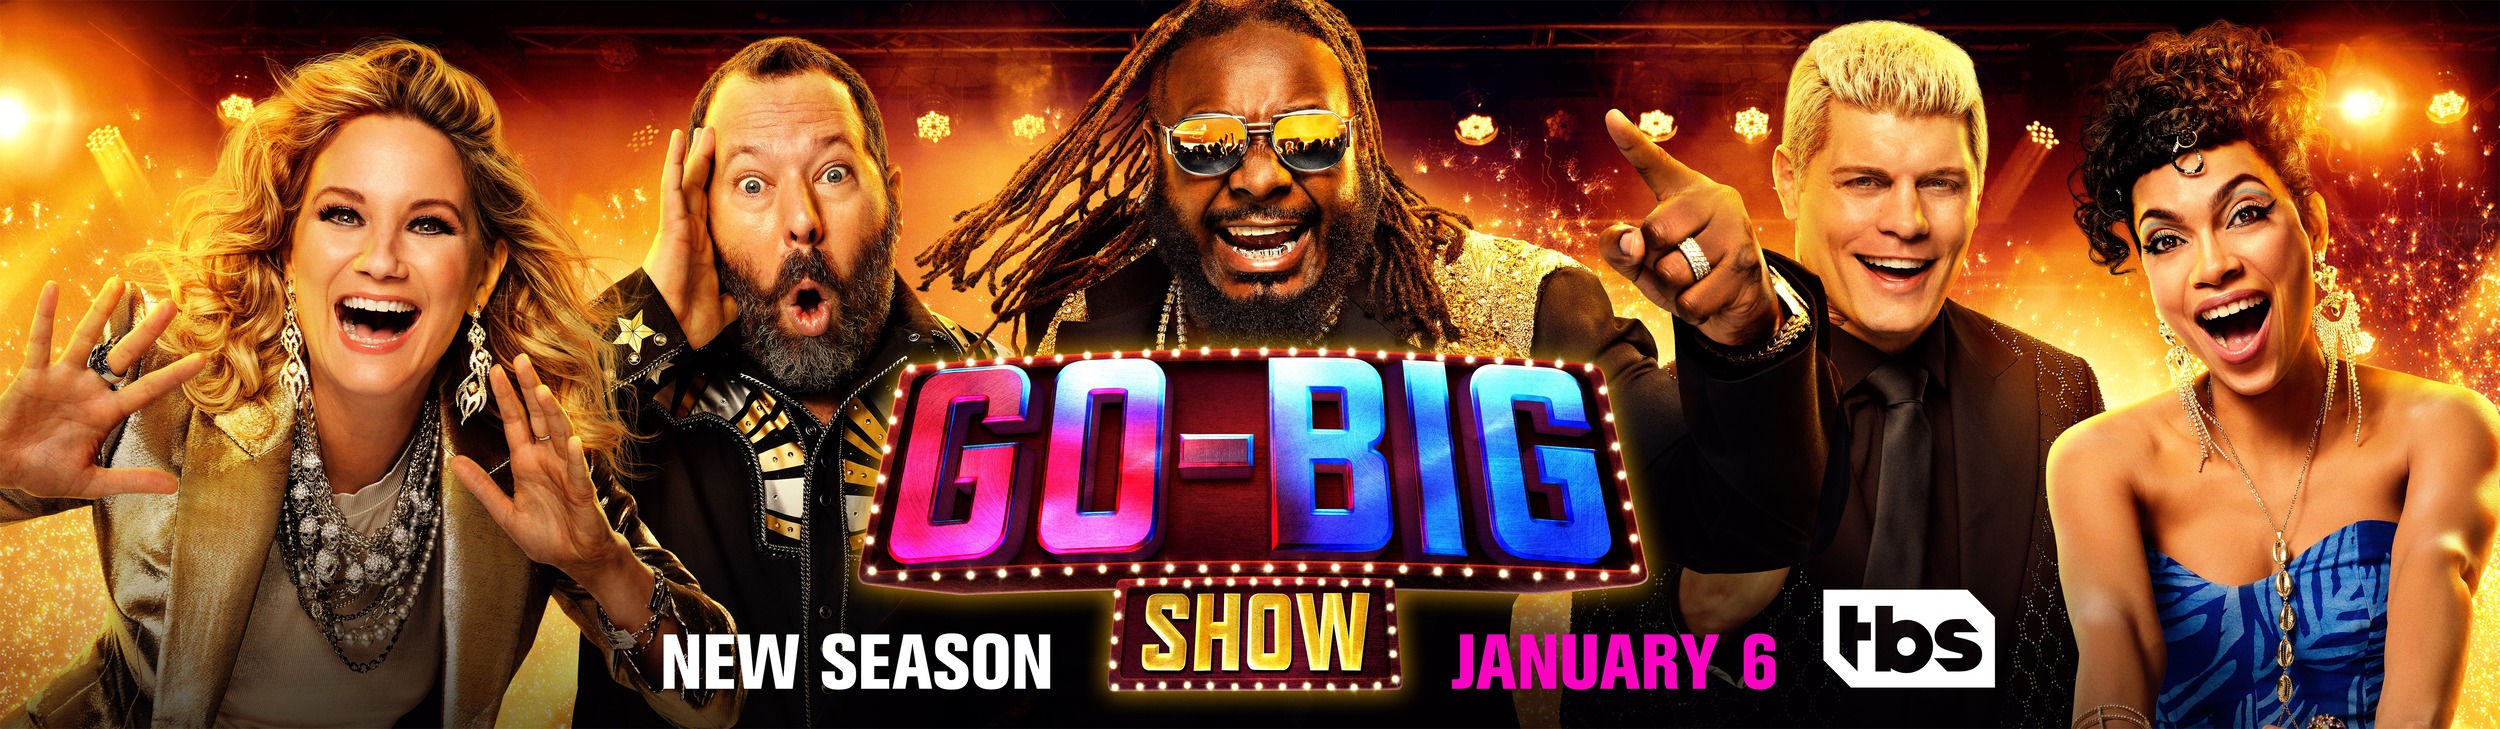 Mega Sized TV Poster Image for Go-Big Show (#5 of 5)